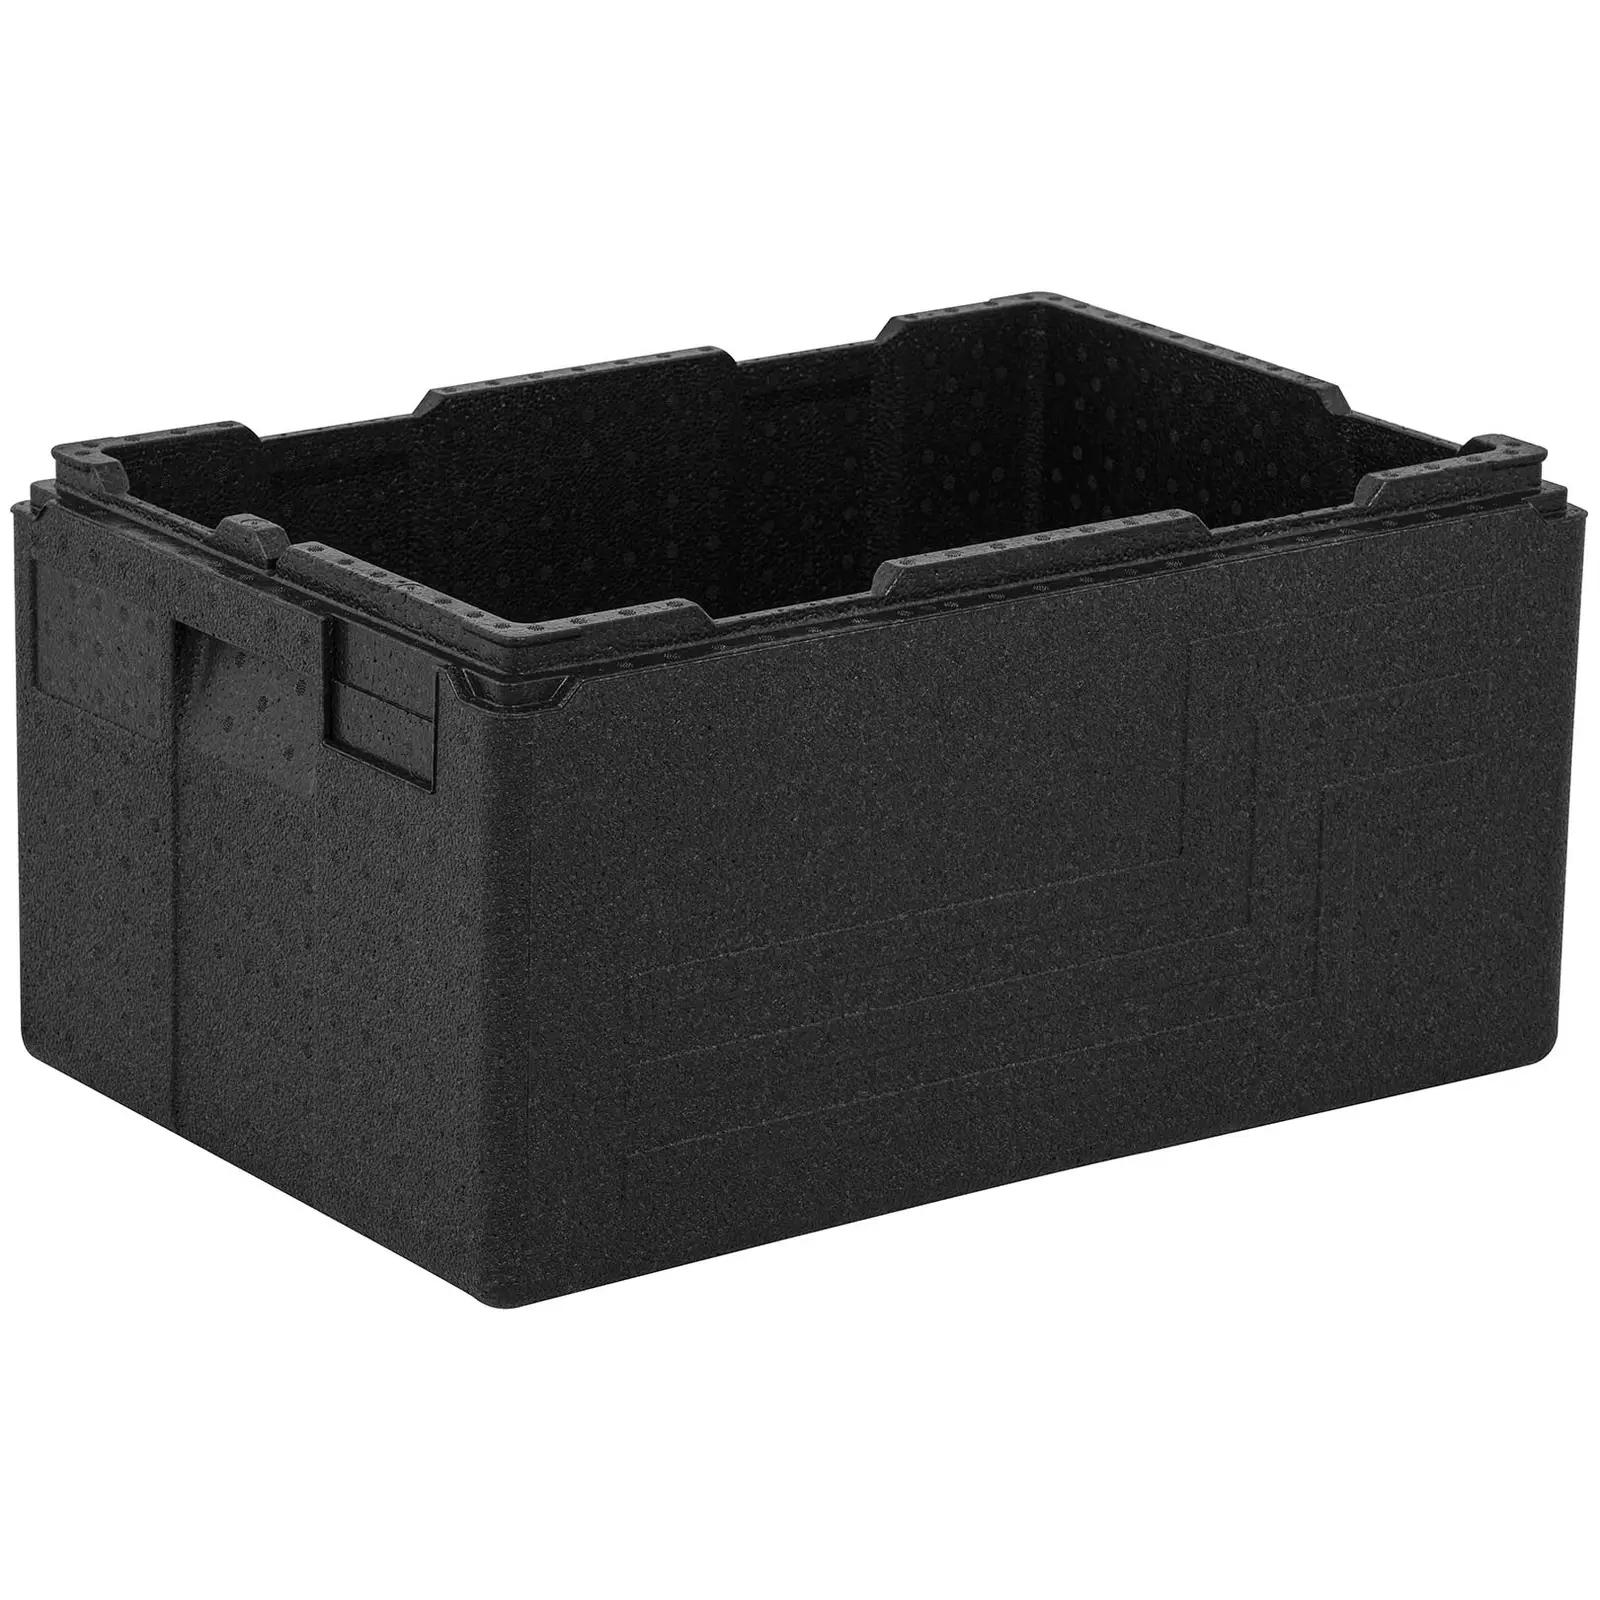 Caja térmica para alimentos - contenedor GN 1/1 (20 cm de profundidad)